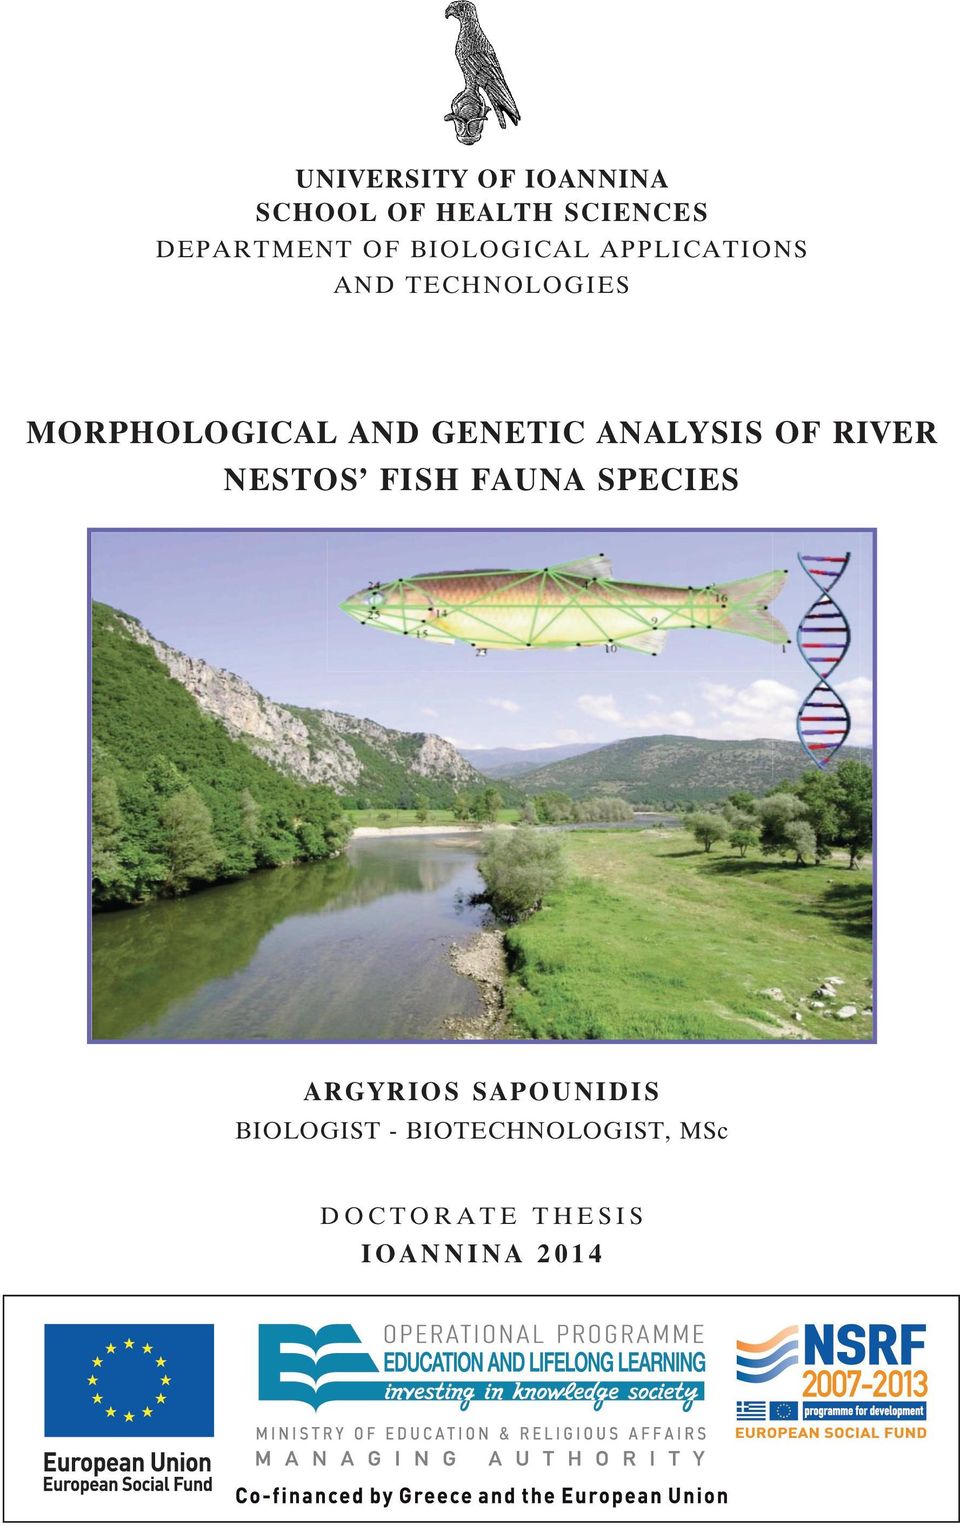 GENETIC ANALYSIS OF RIVER NESTOS FISH FAUNA SPECIES ARGYRIOS